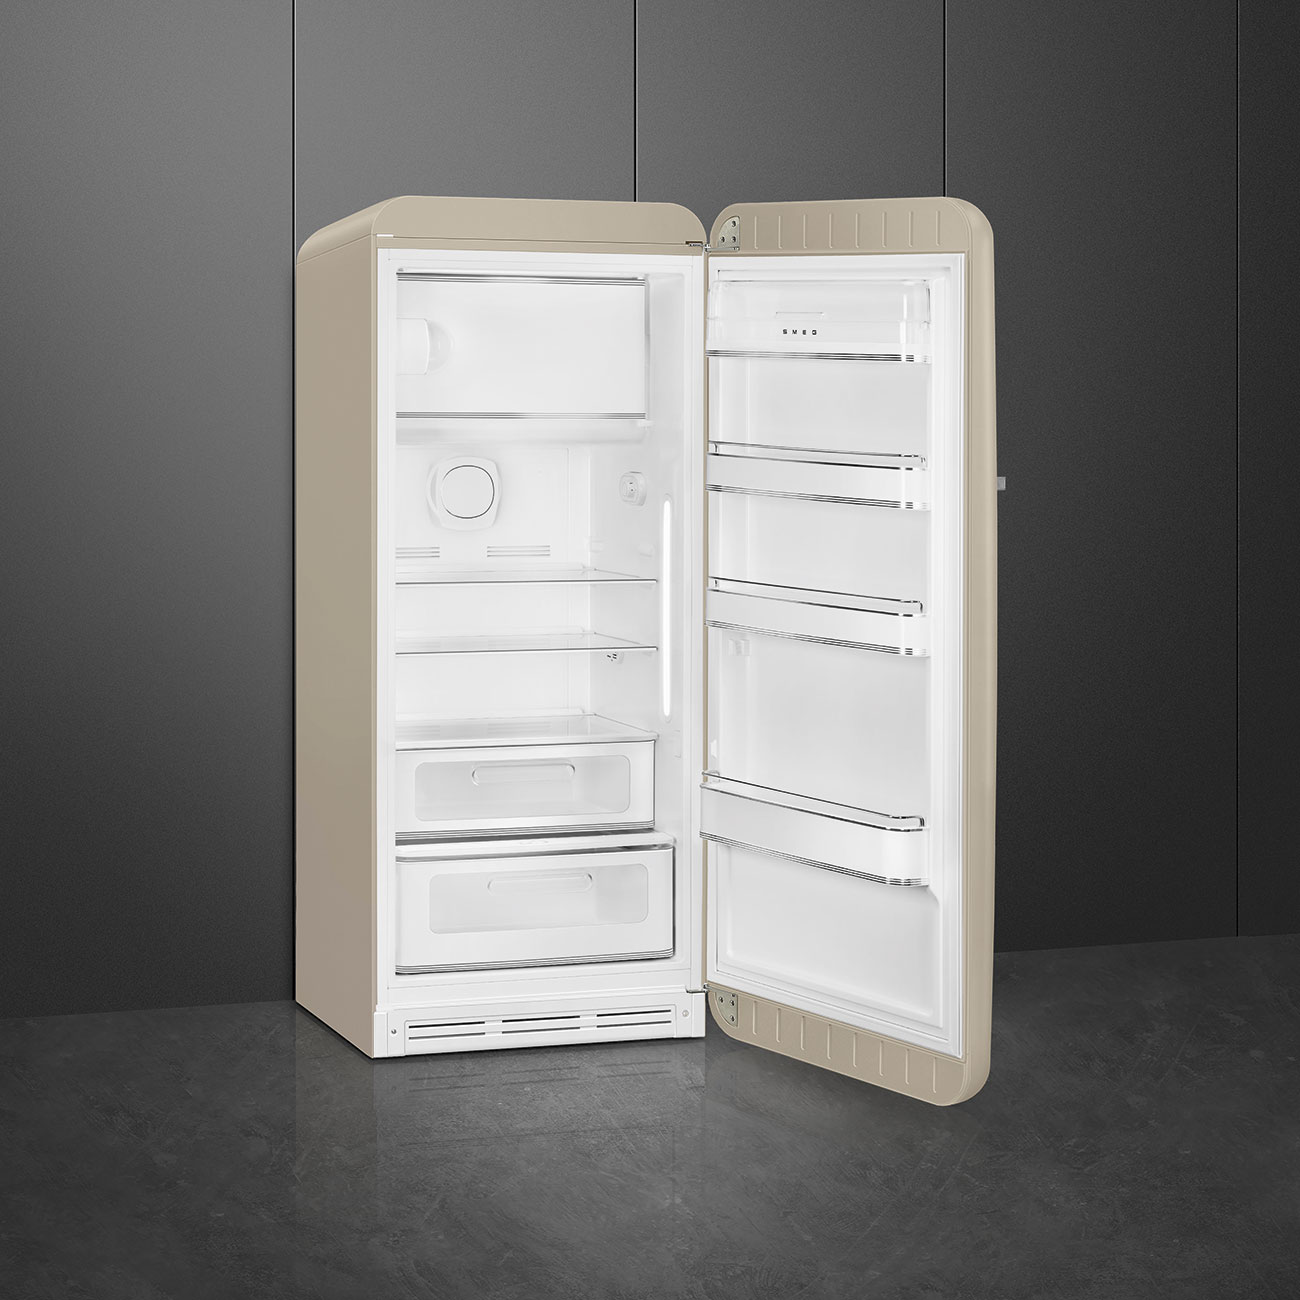 Perfectly Pale refrigerator - Smeg_2